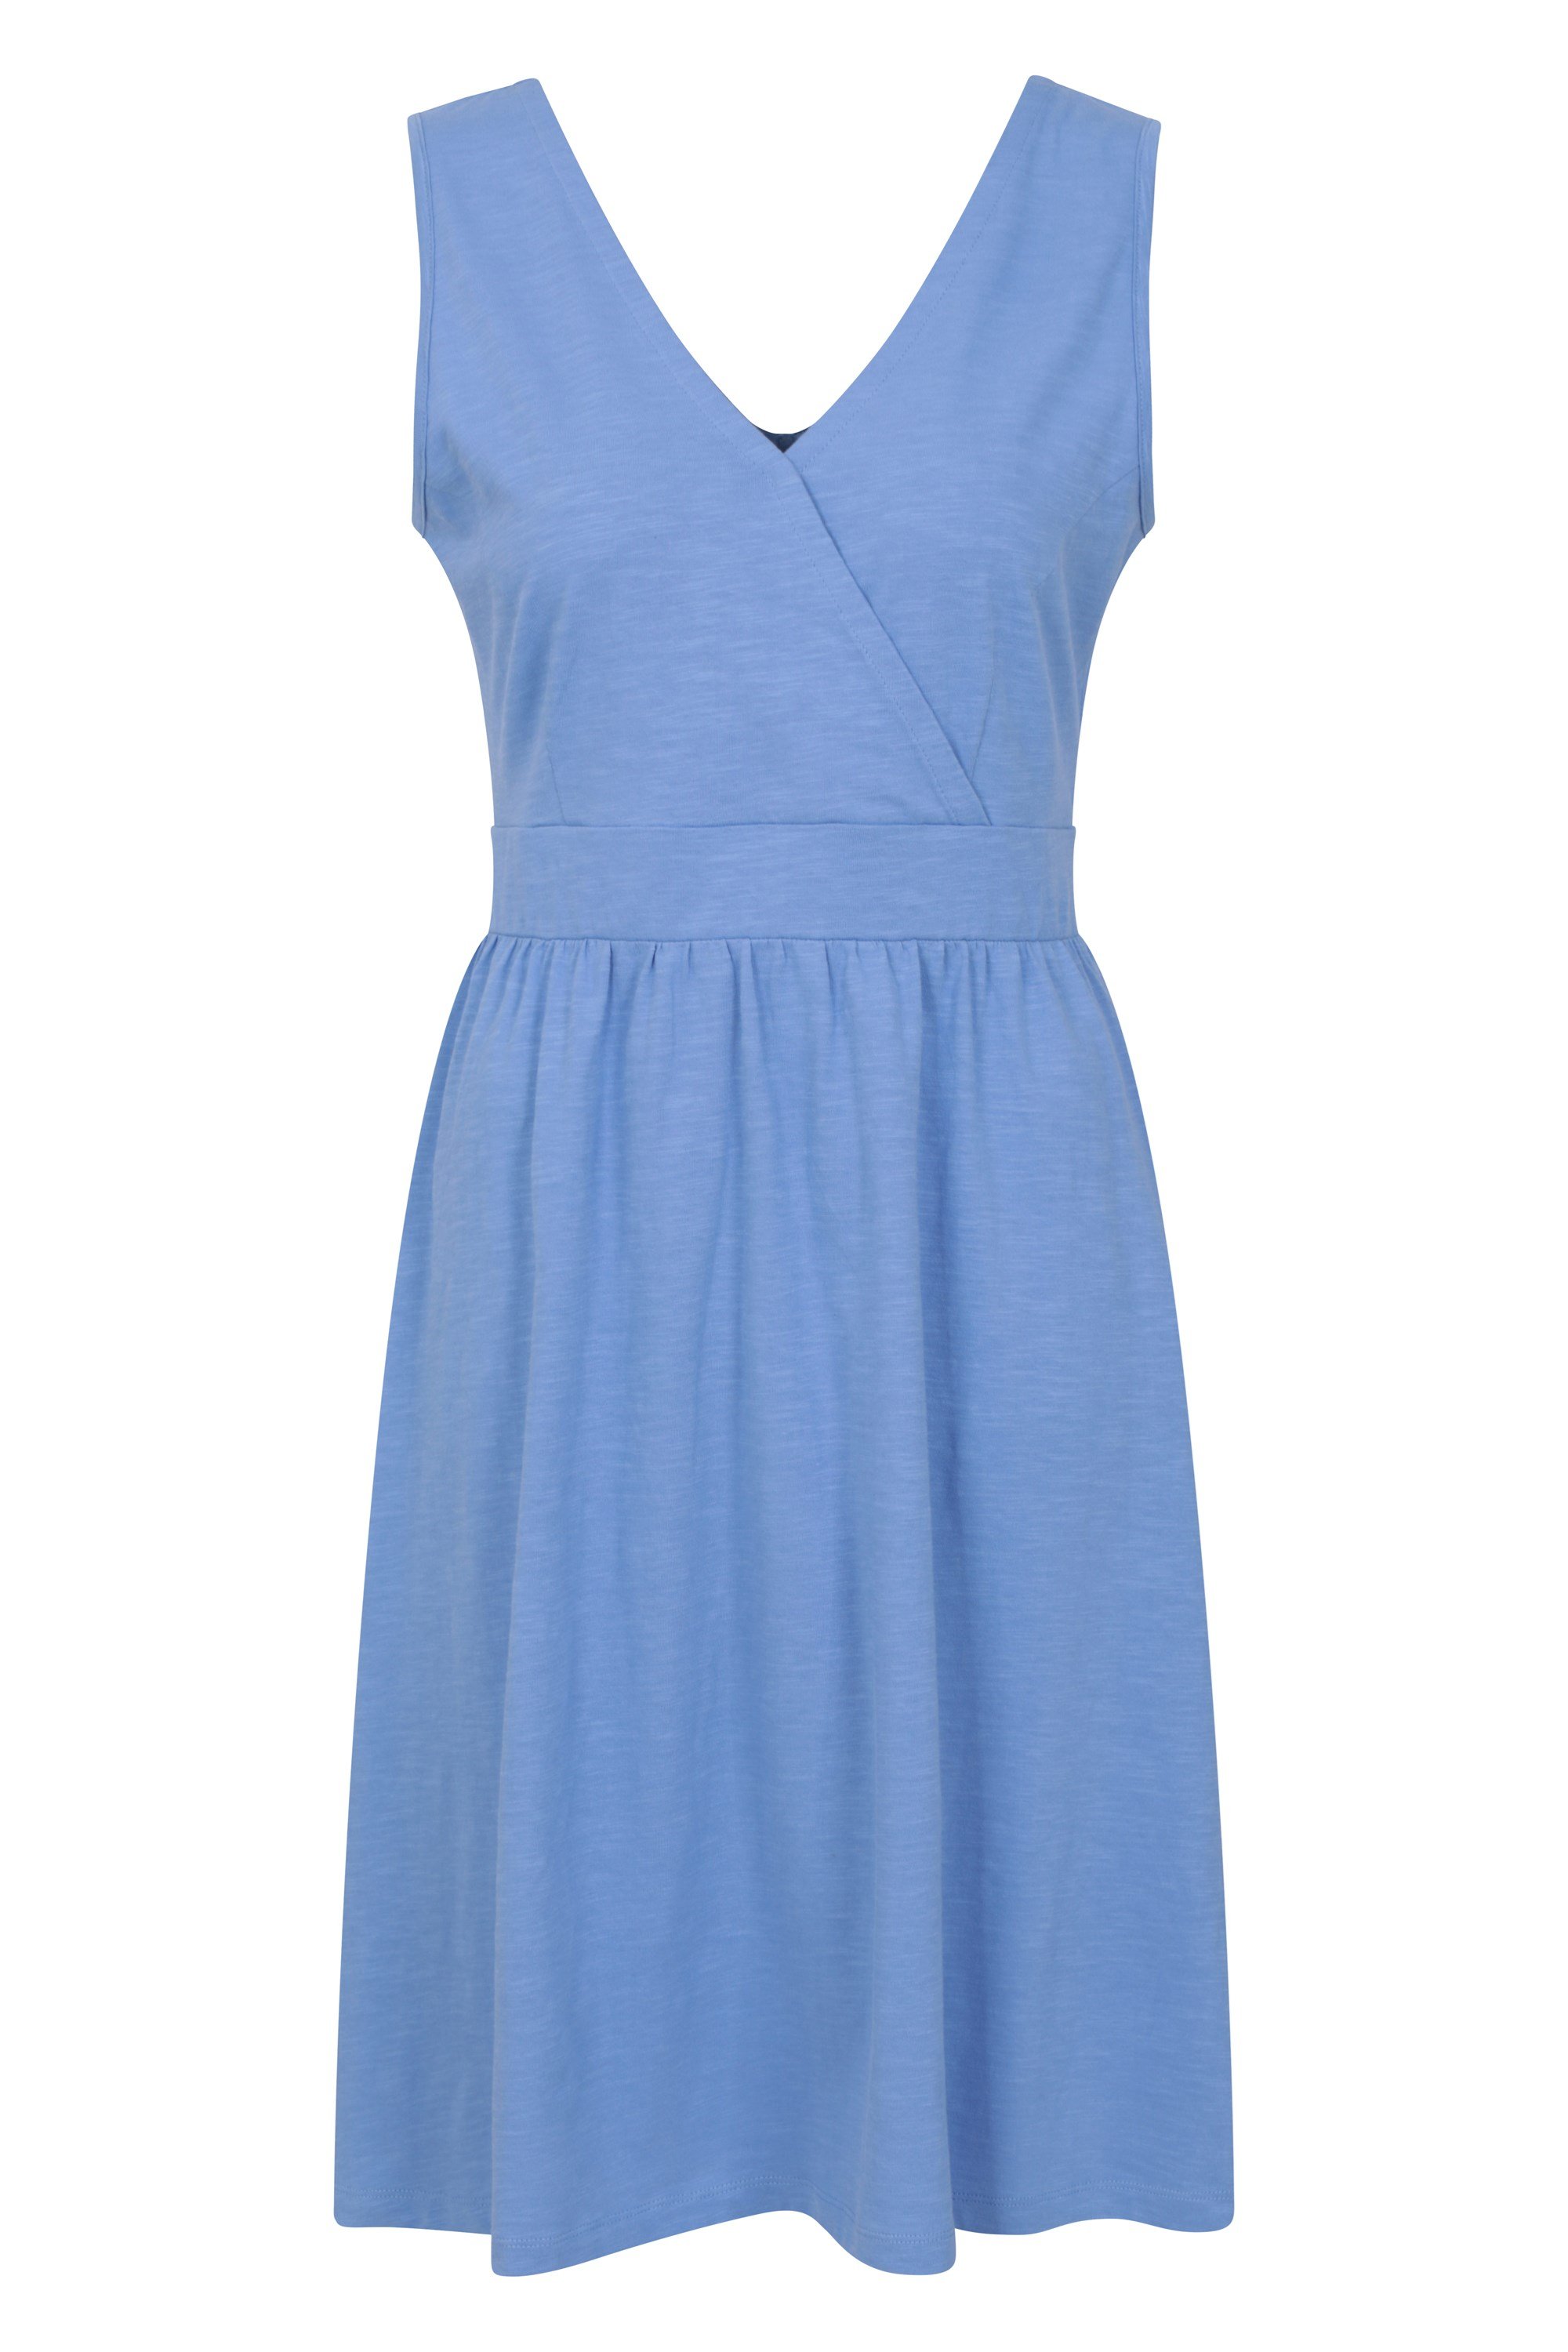 Newquay Womens Sleeveless Dress - Blue